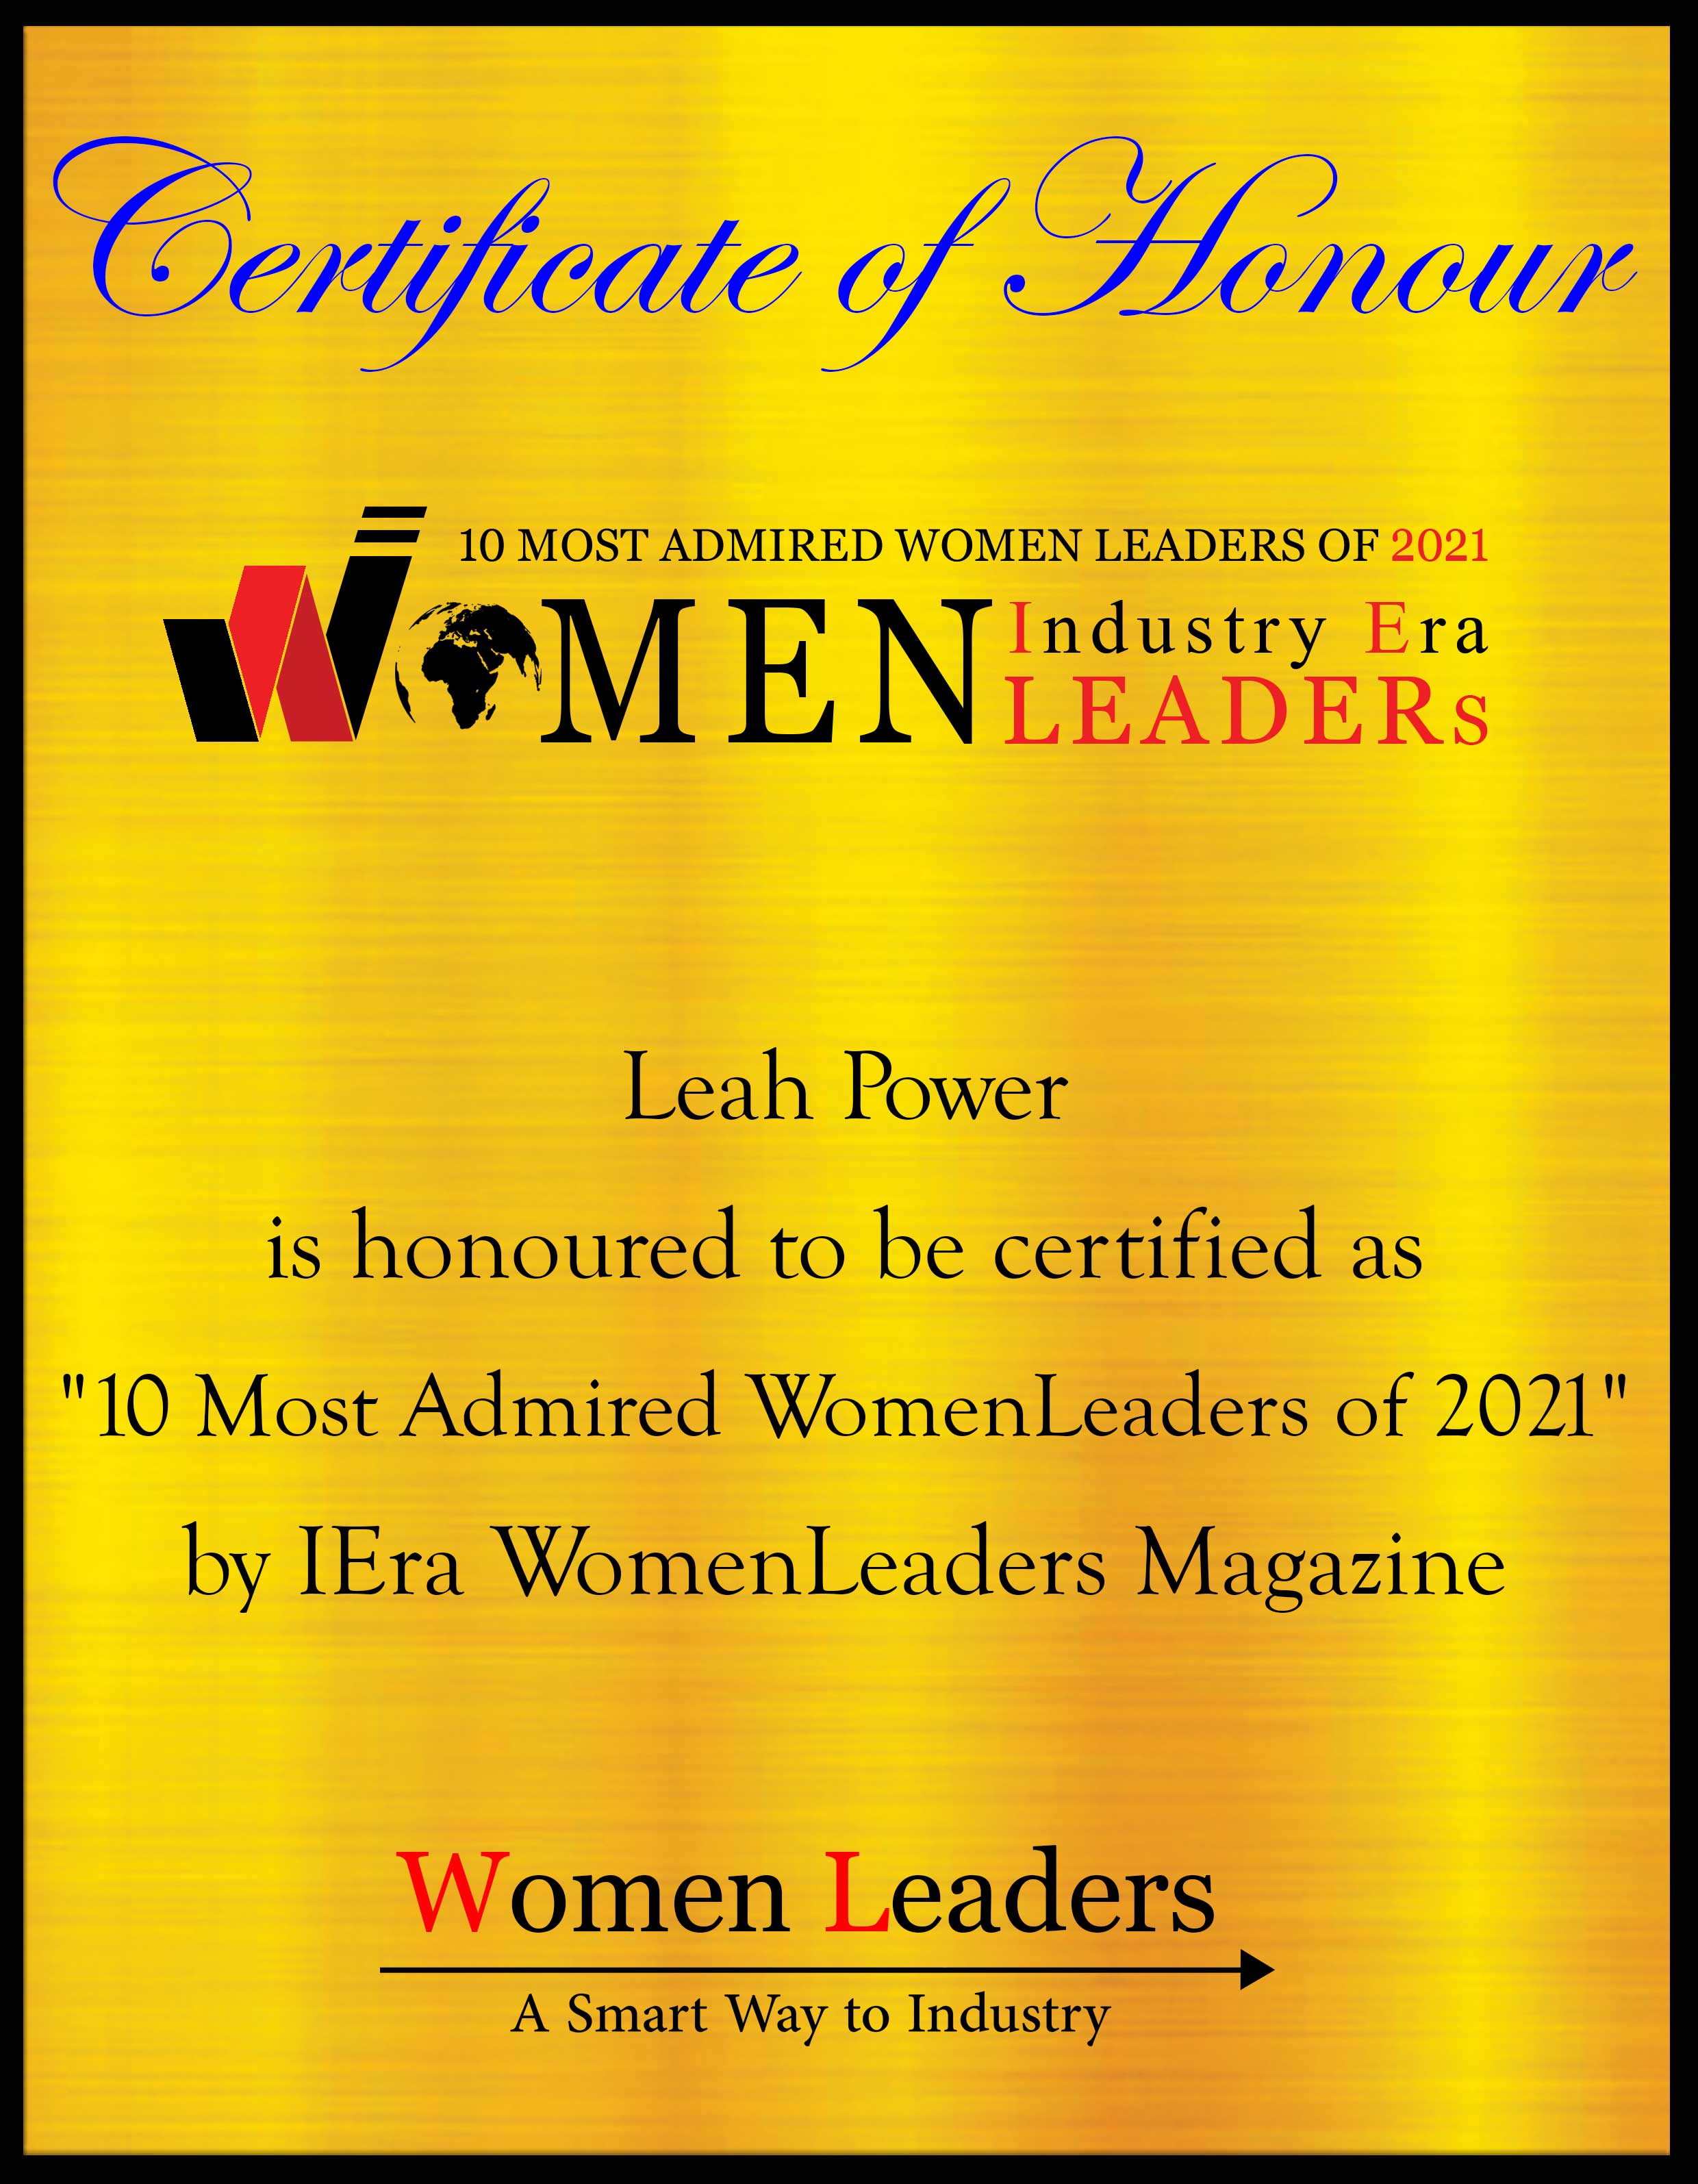 Leah Power, EVP, Institute of Communication Agencies, Most Admired WomenLeaders of 2021